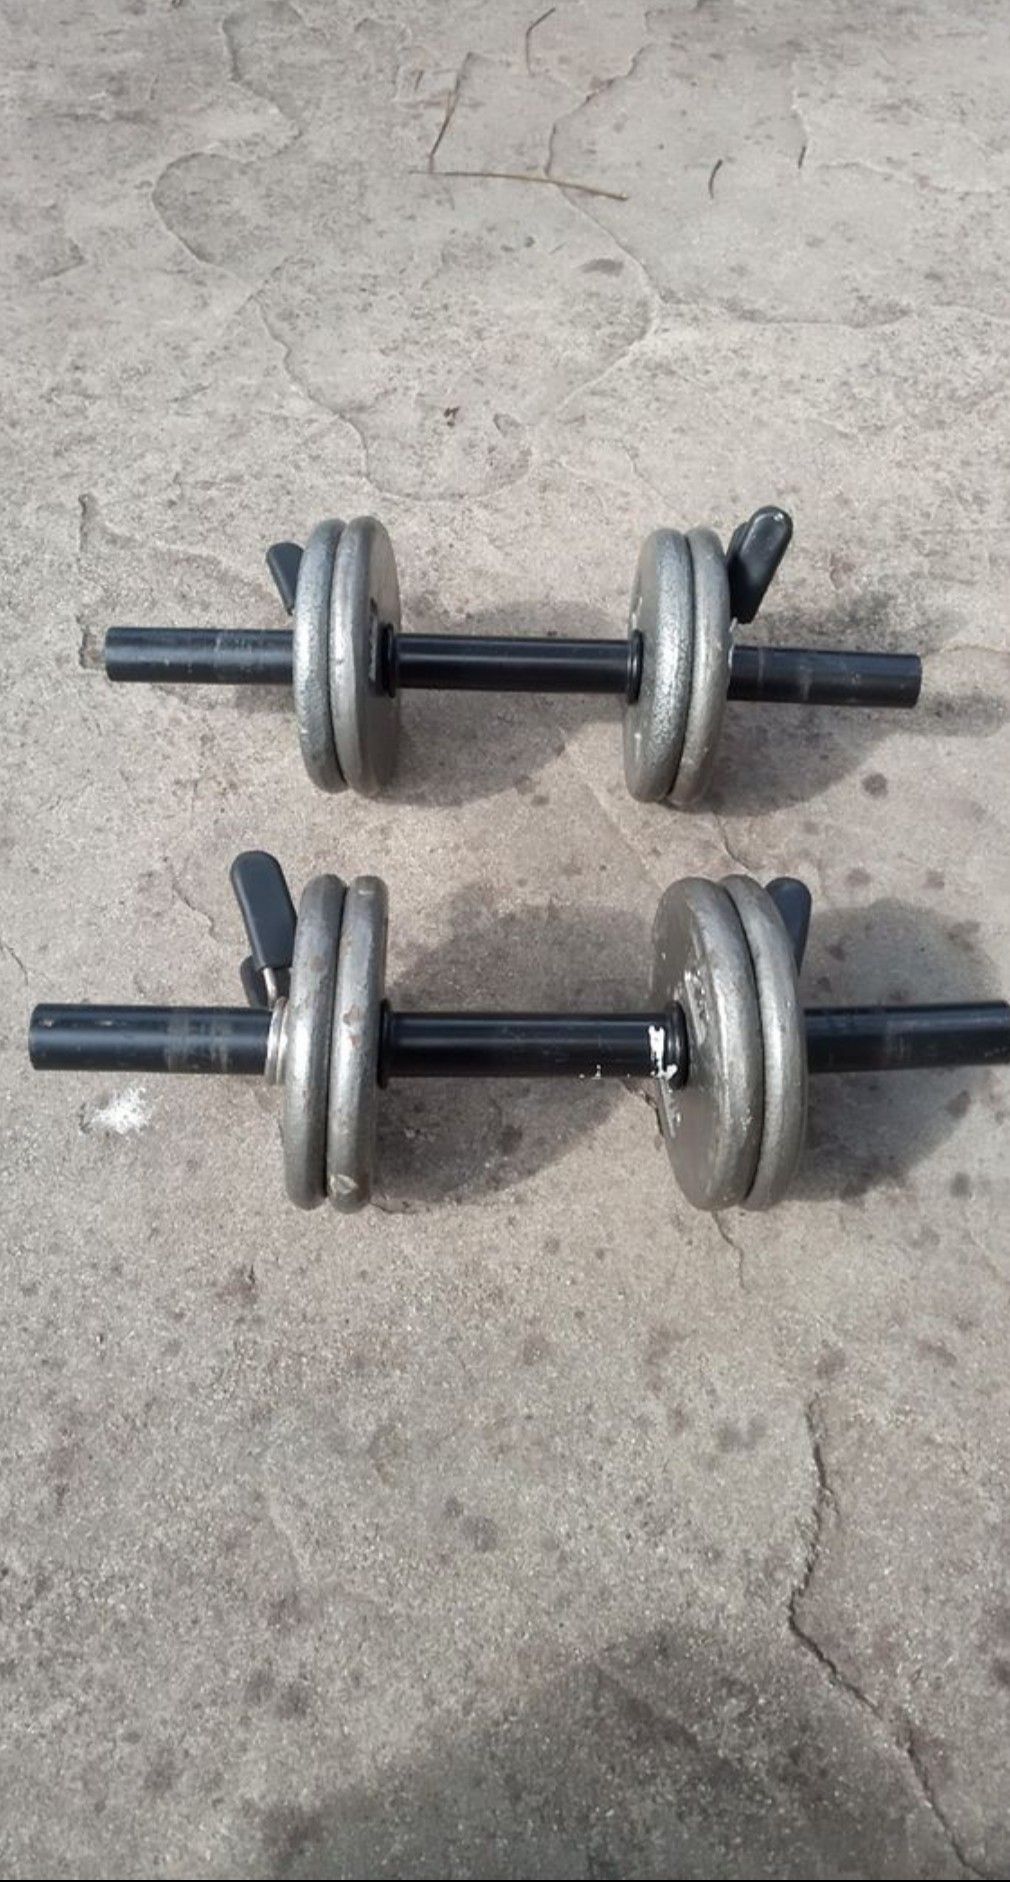 8 CAP 2.5 pound standard weights ( no handles ) weights only